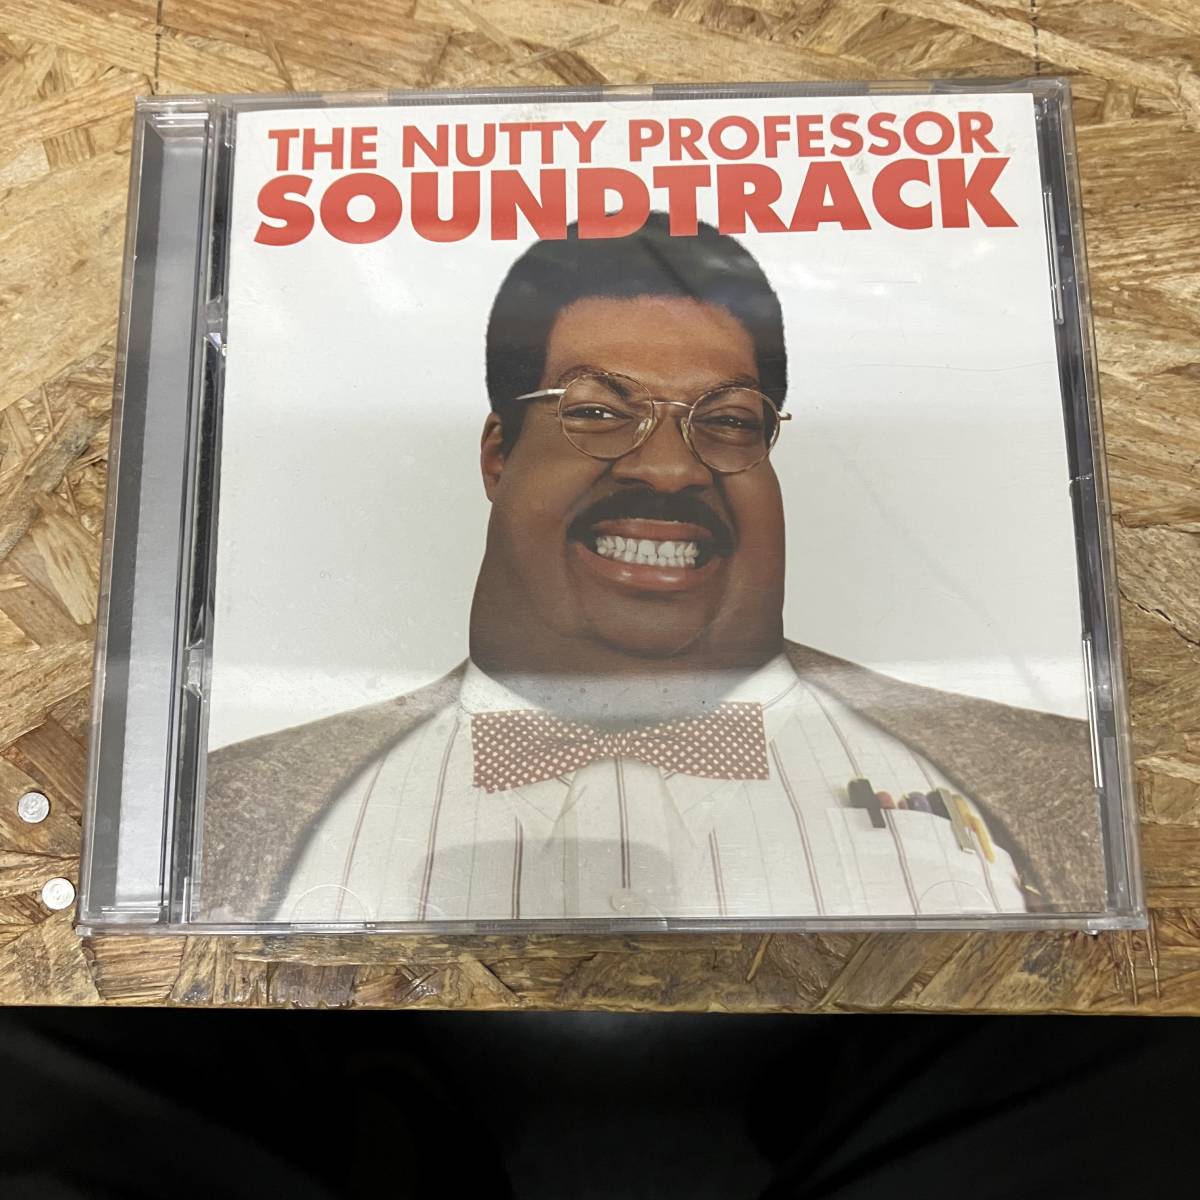 ● POPS,ROCK THE NUTTY PROFESSOR SOUNDTRACK アルバム,名作! CD 中古品_画像1